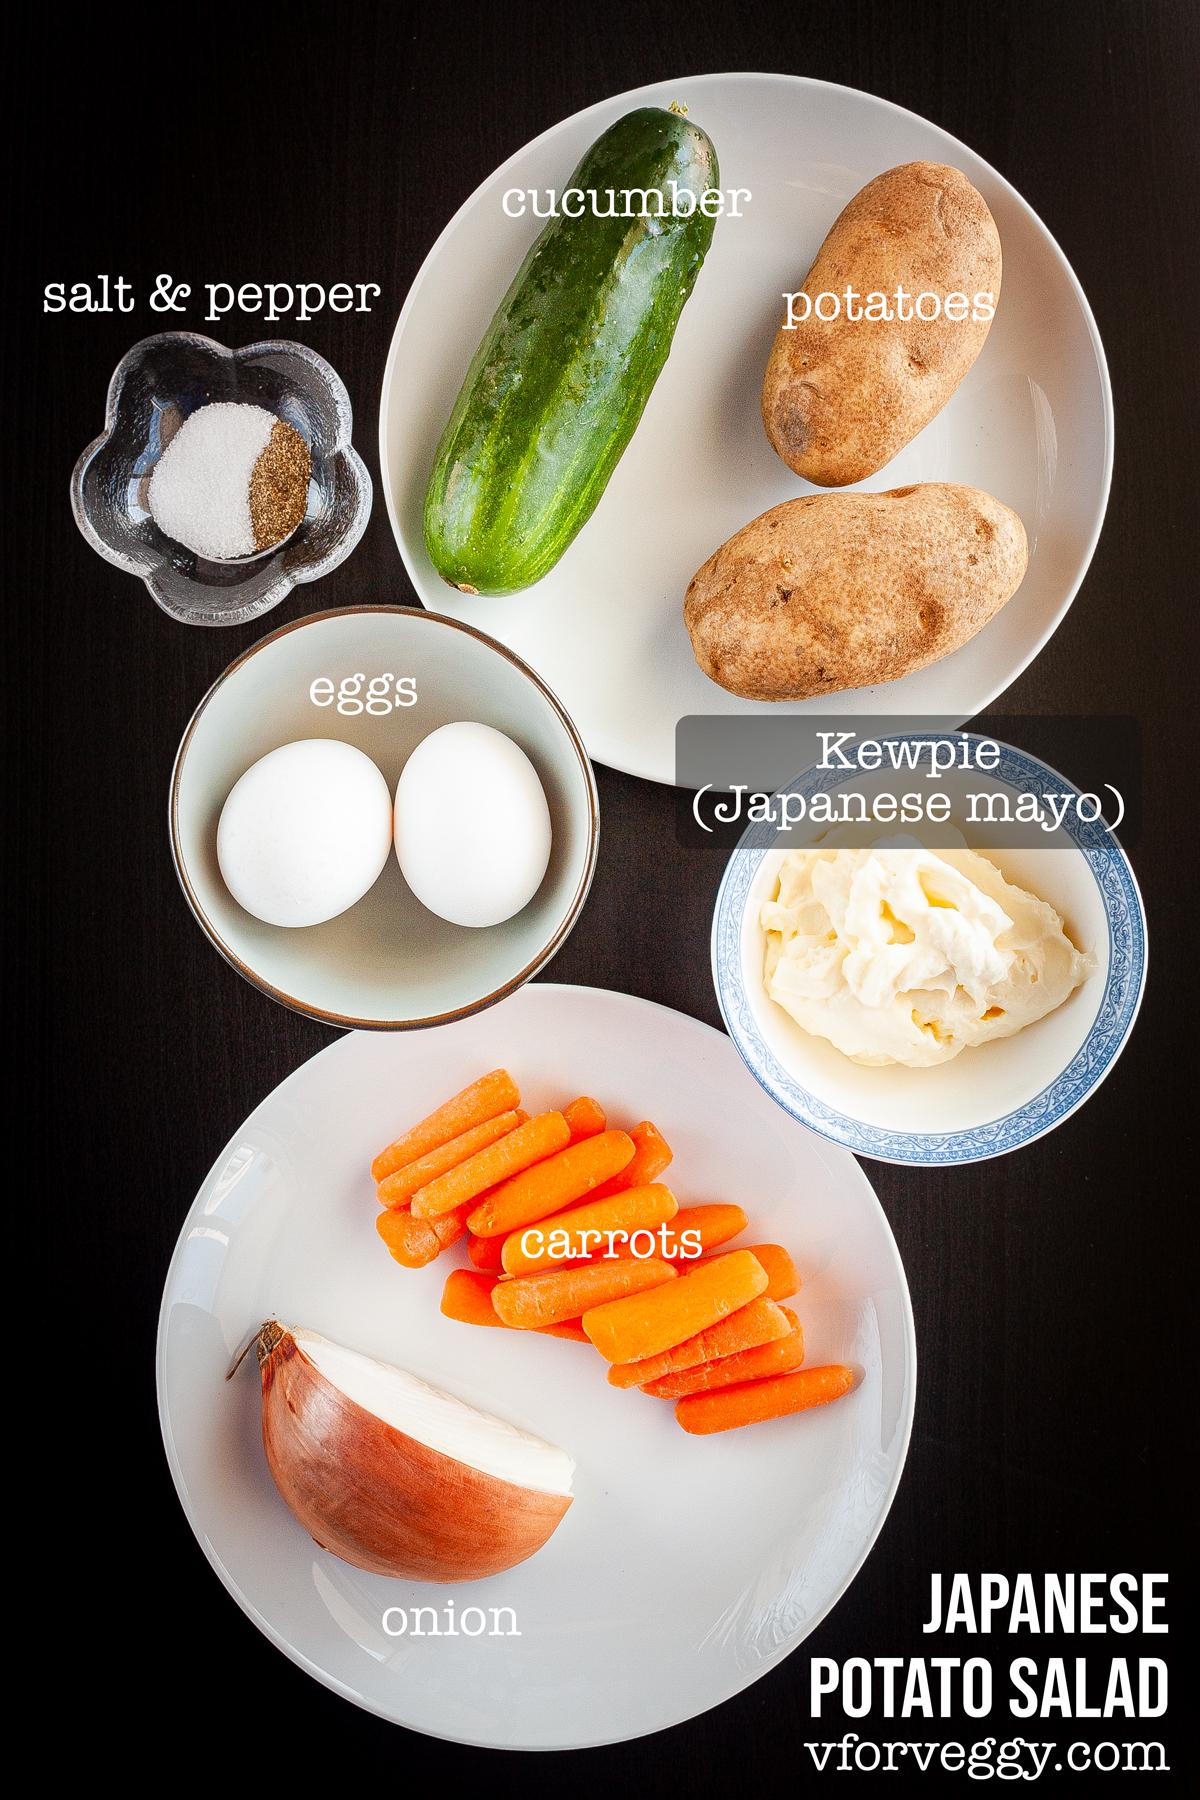 Ingredients for a basic Japanese potato salad: potatoes, hard-boiled eggs, cucumber, carrot, onion, Japanese mayo (e.g. Kewpie), salt, and pepper.